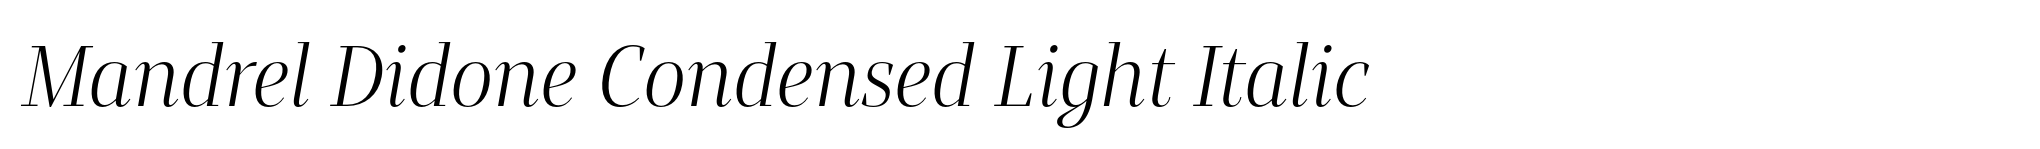 Mandrel Didone Condensed Light Italic image